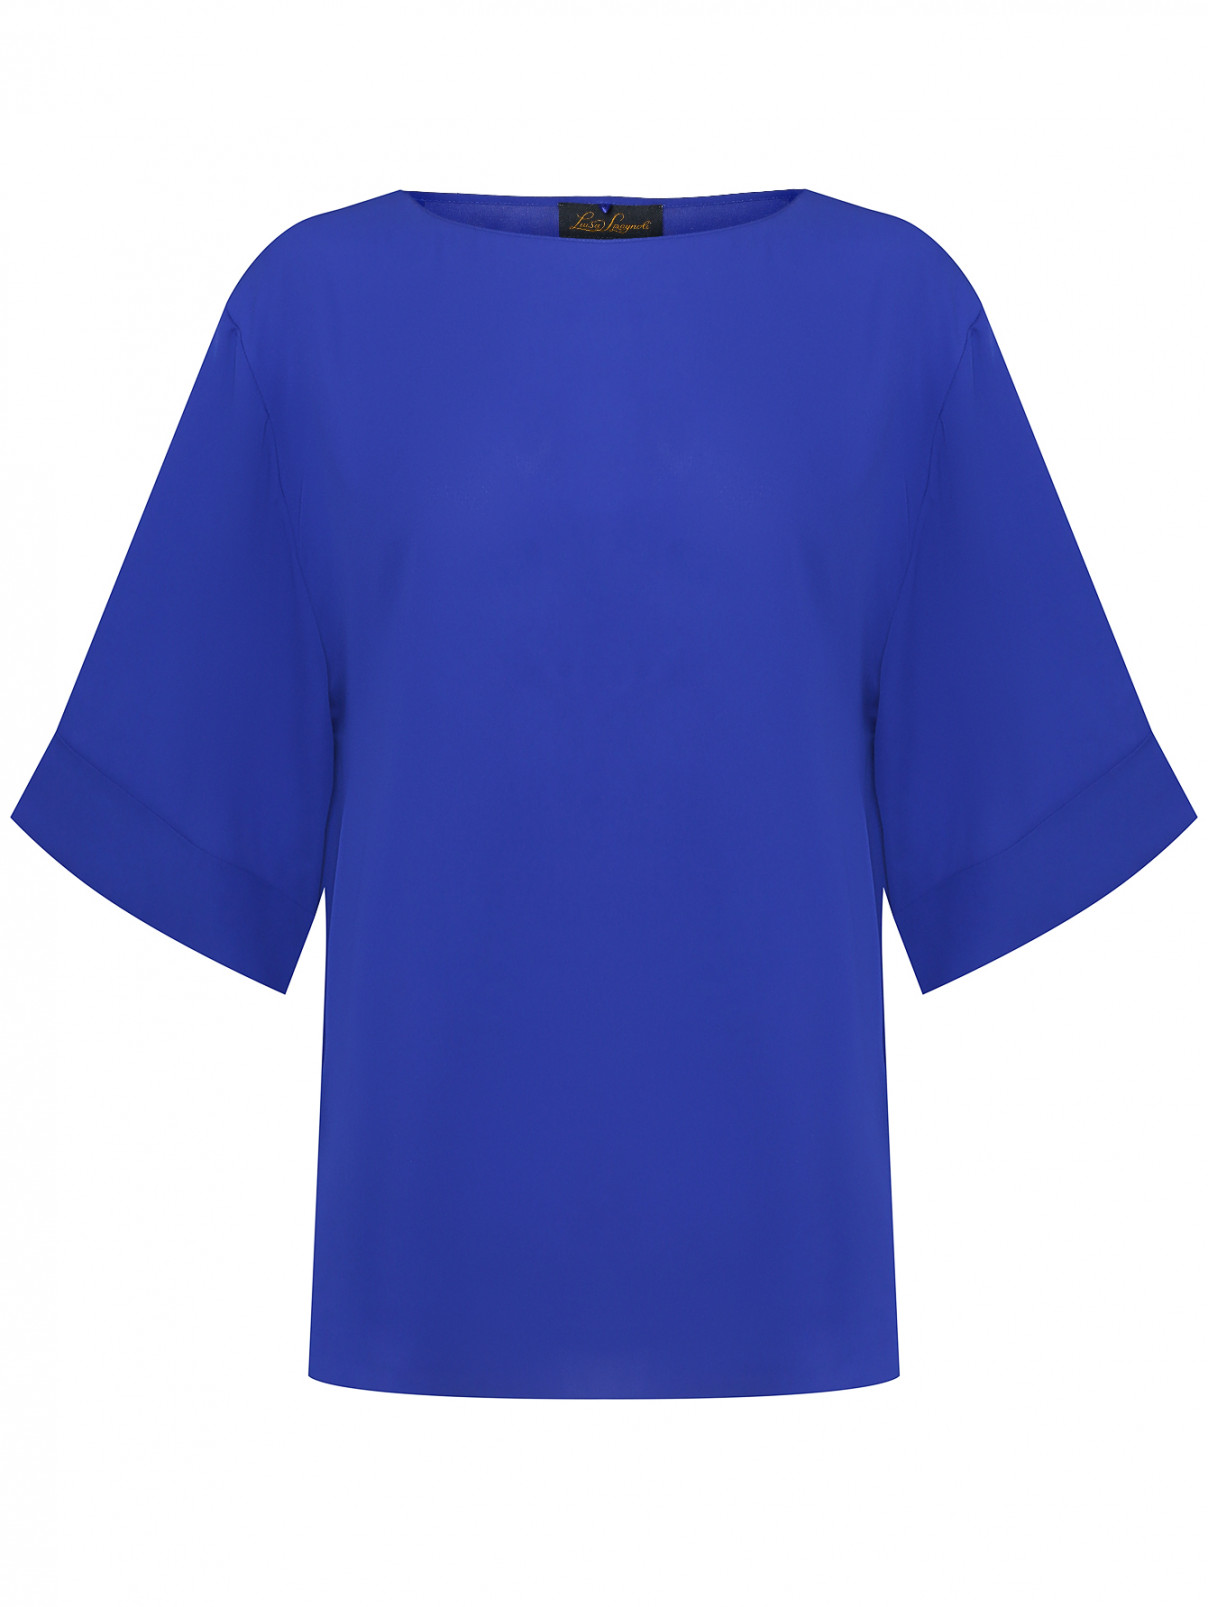 Блуза из шелка с короткими рукавами Luisa Spagnoli  –  Общий вид  – Цвет:  Синий